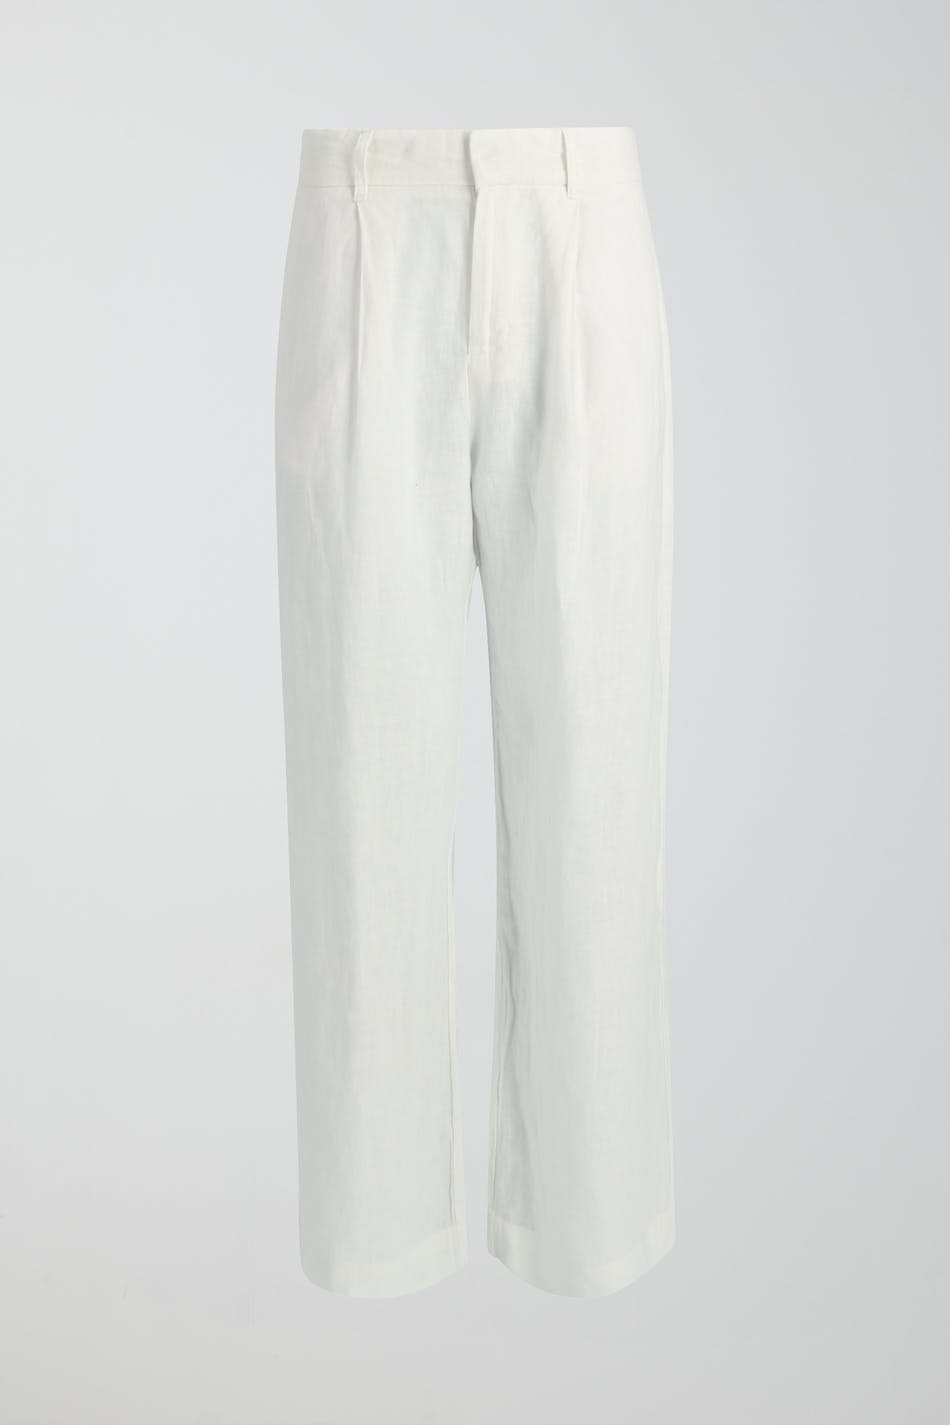 Denise tall linen trousers